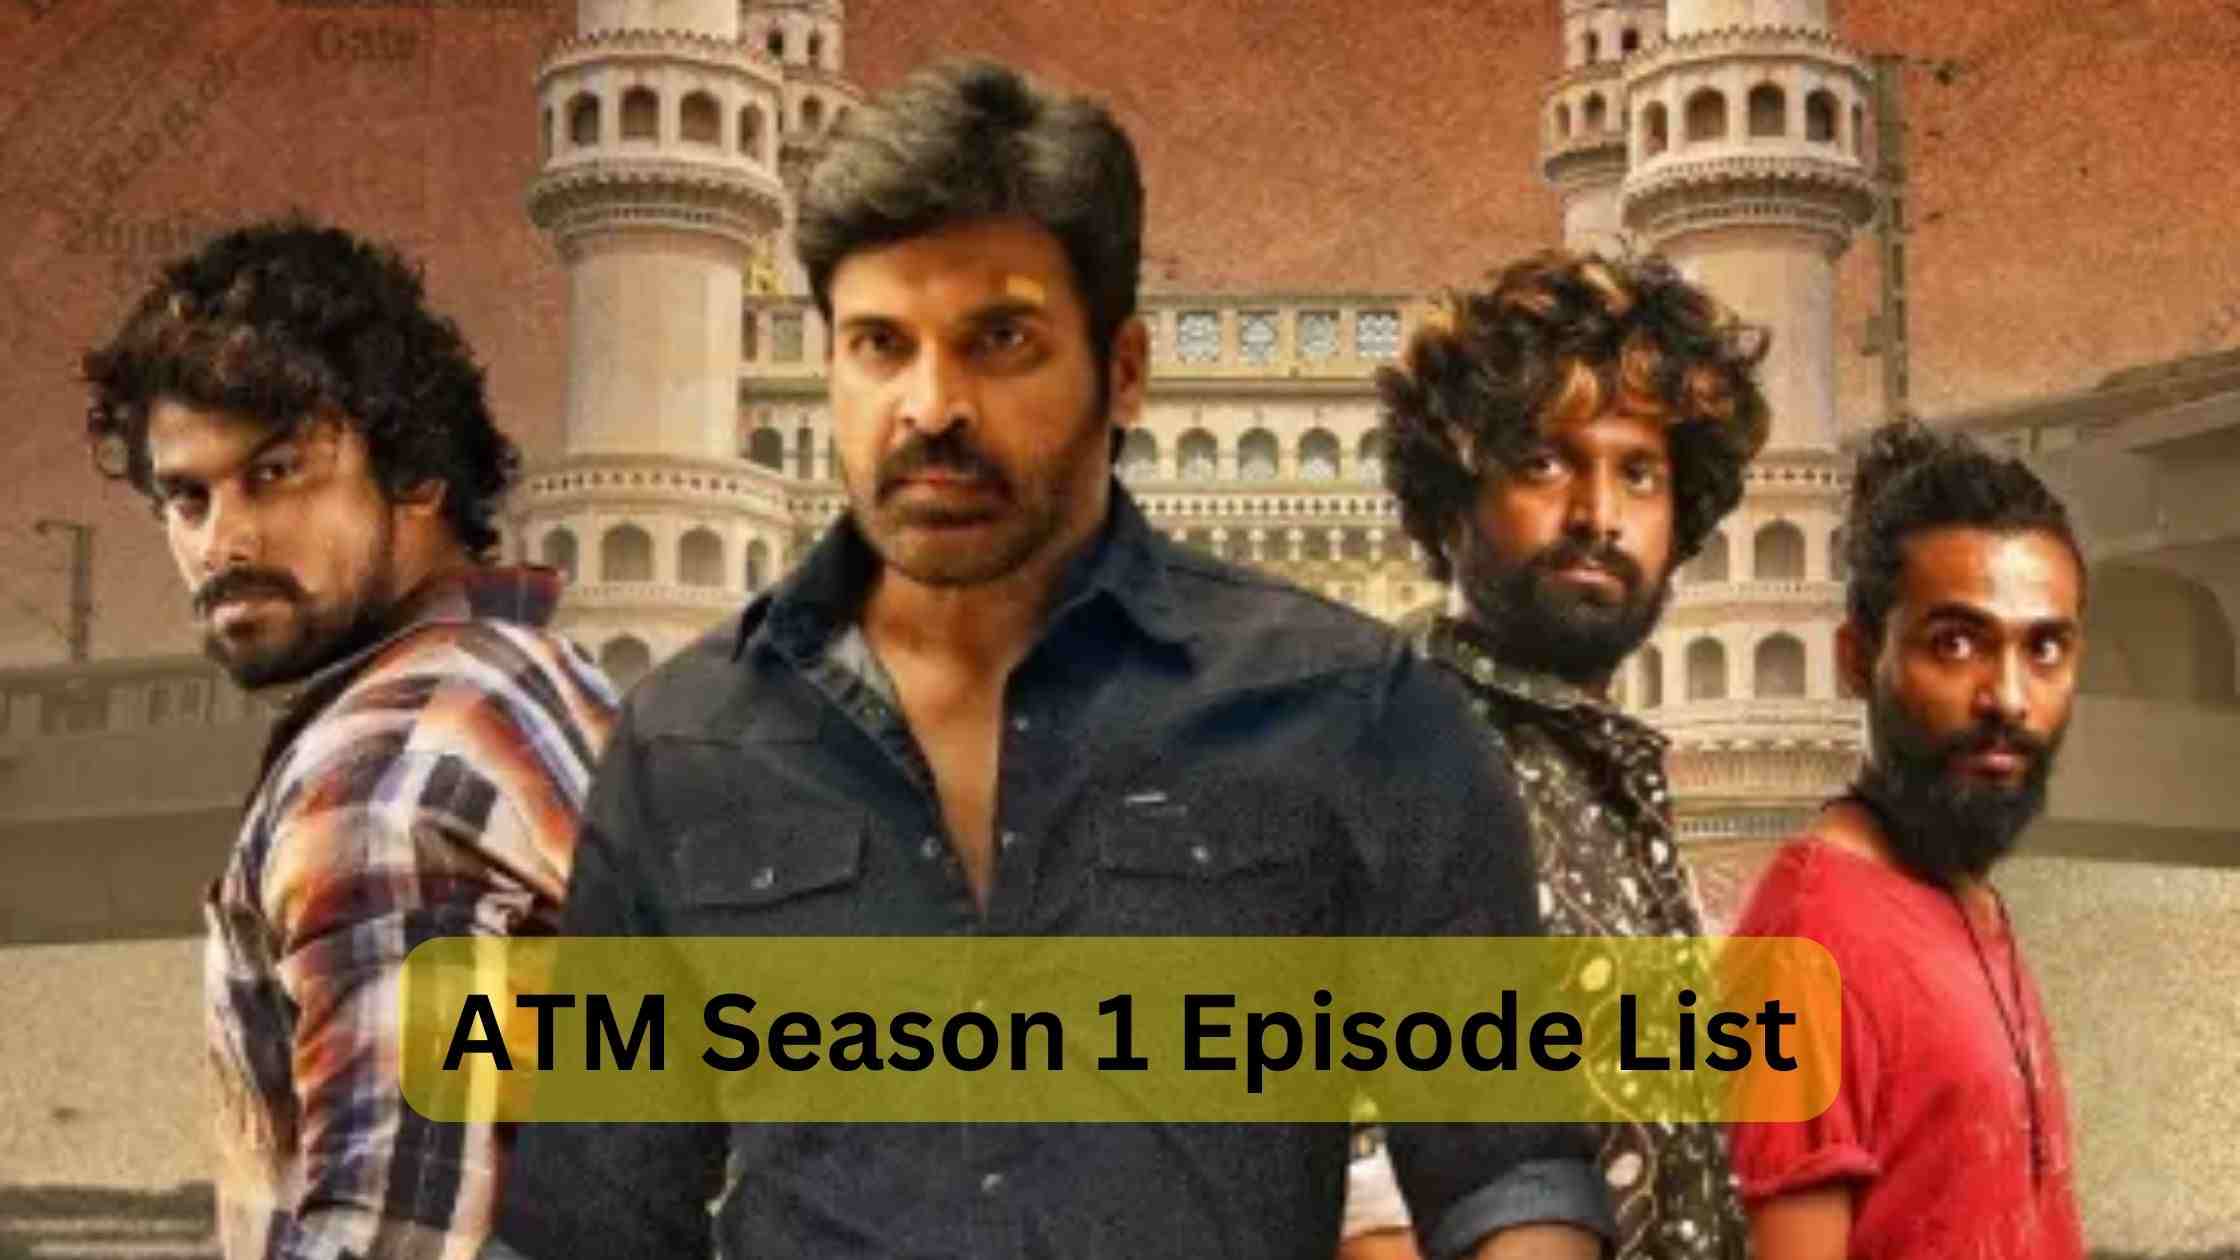 ATM season 1 Episode list